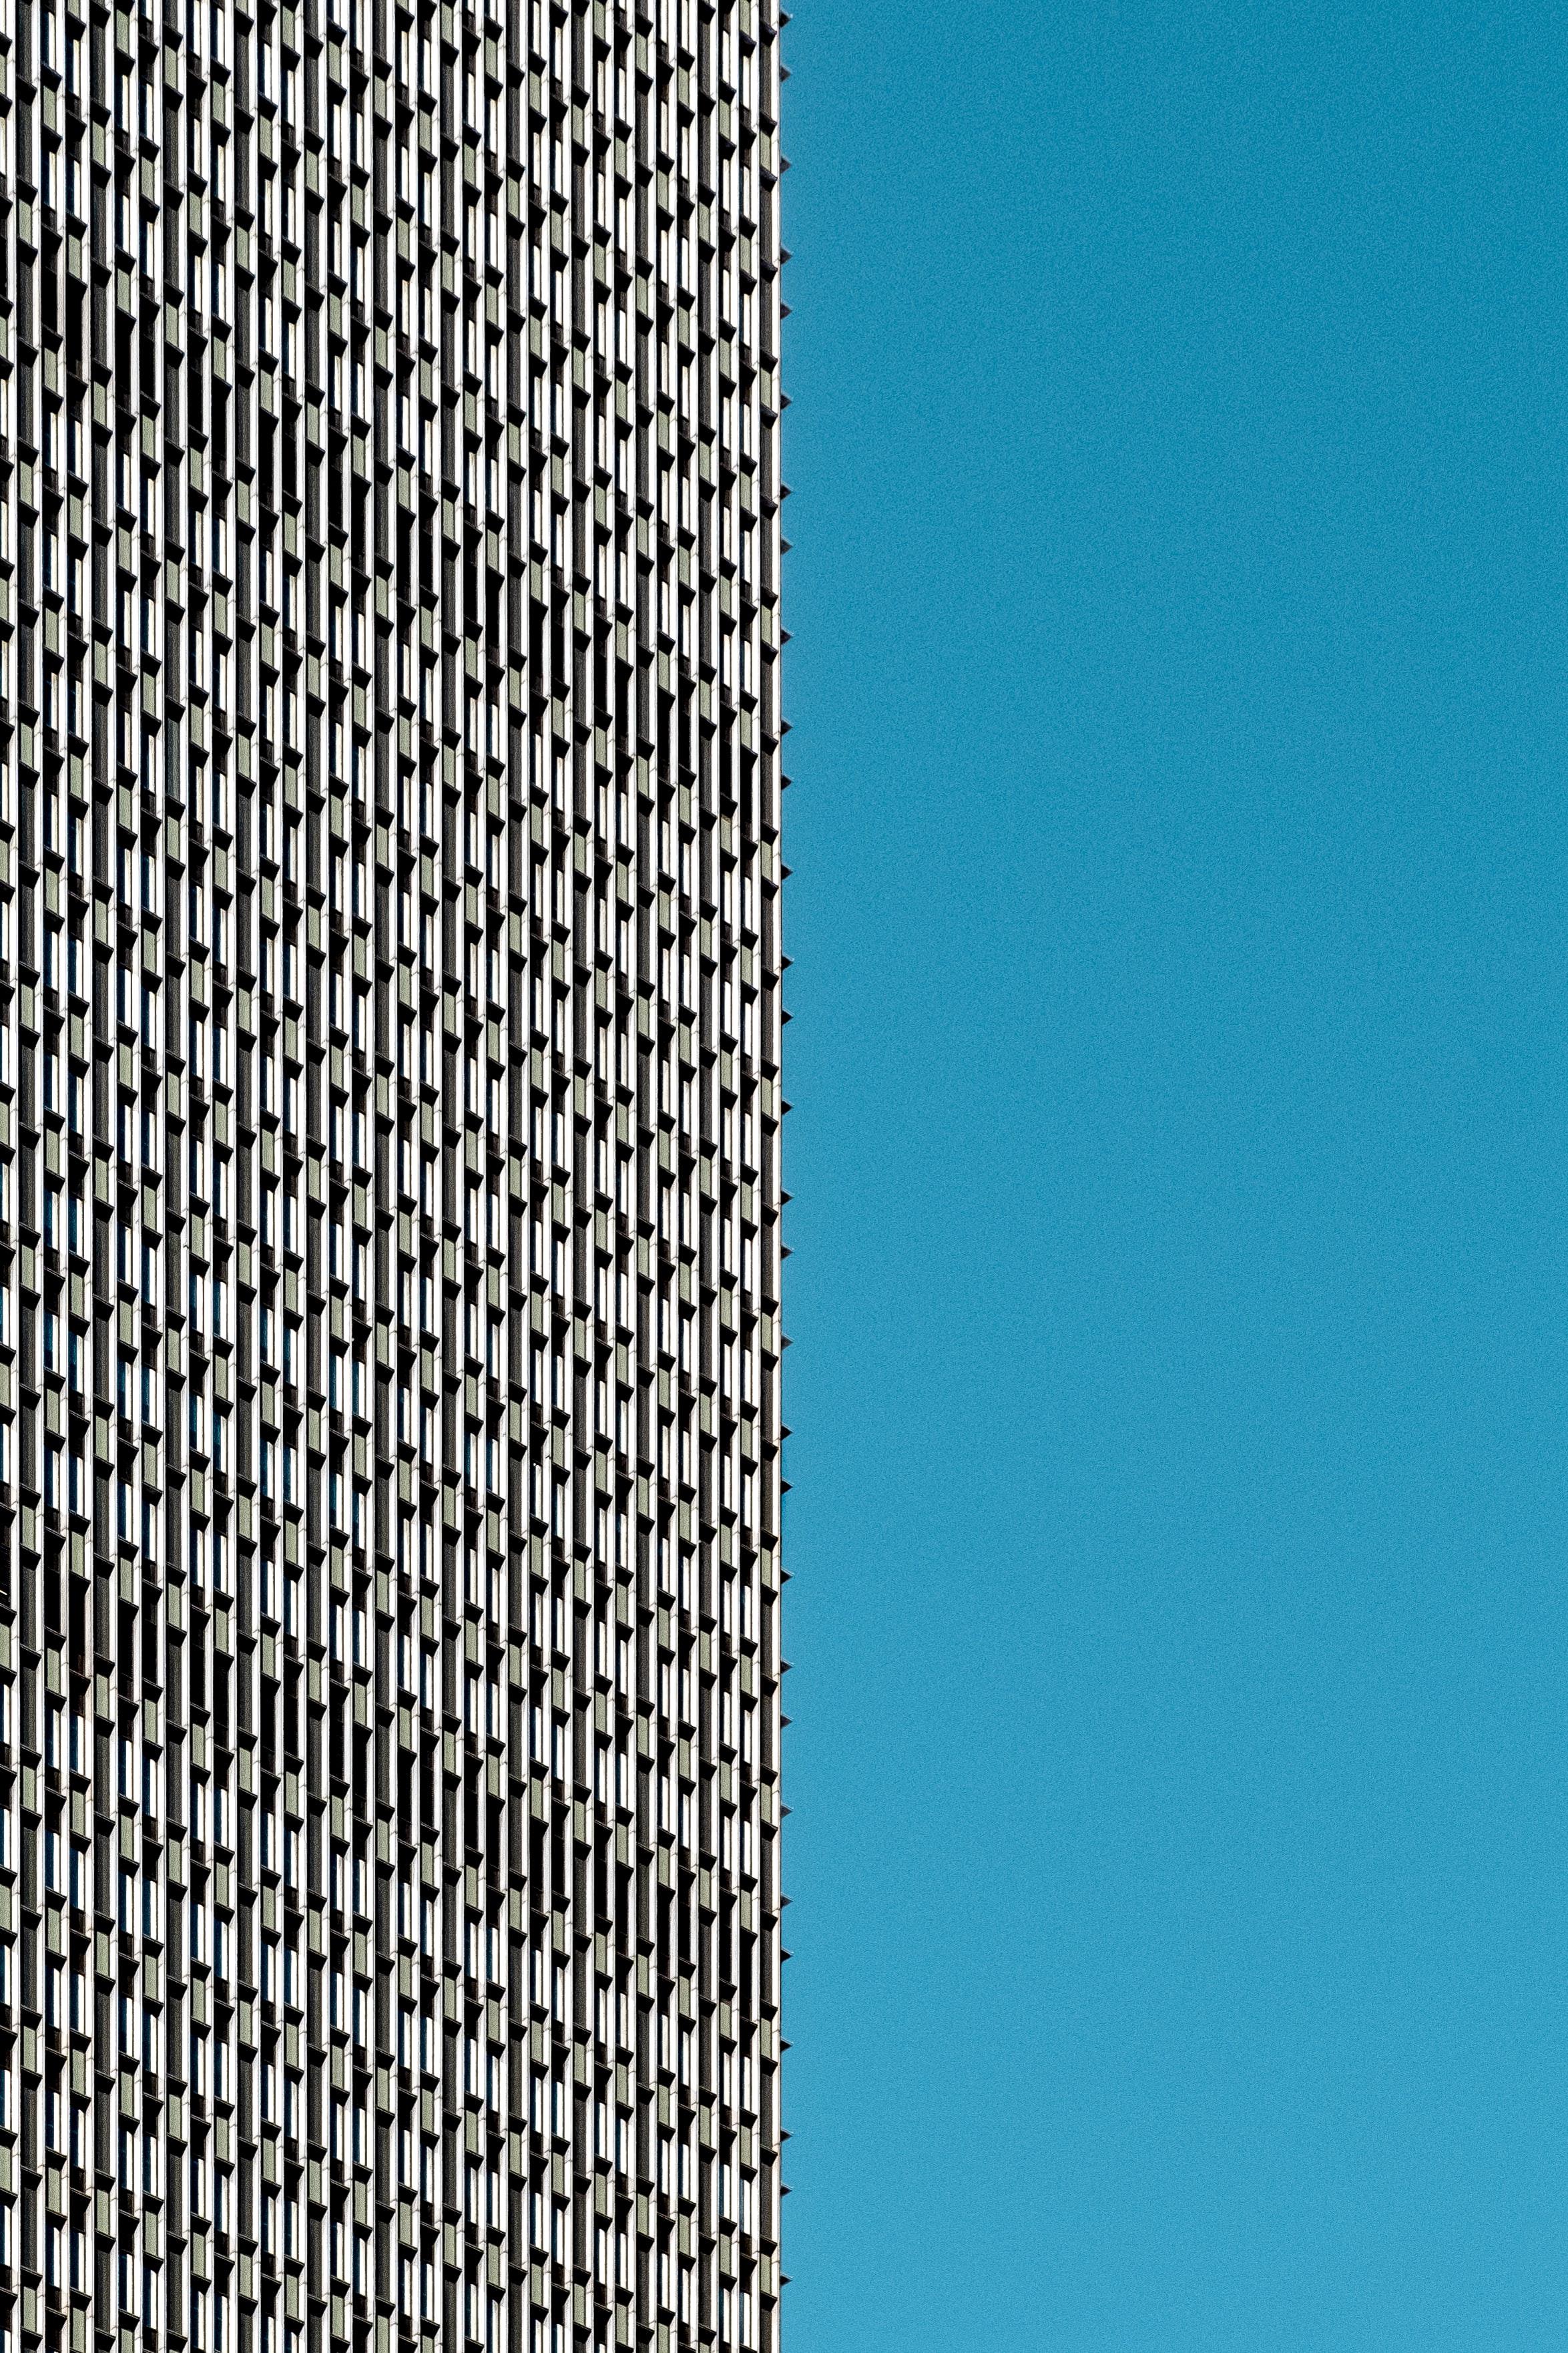 Phone Background minimalism, architecture, facade, sky